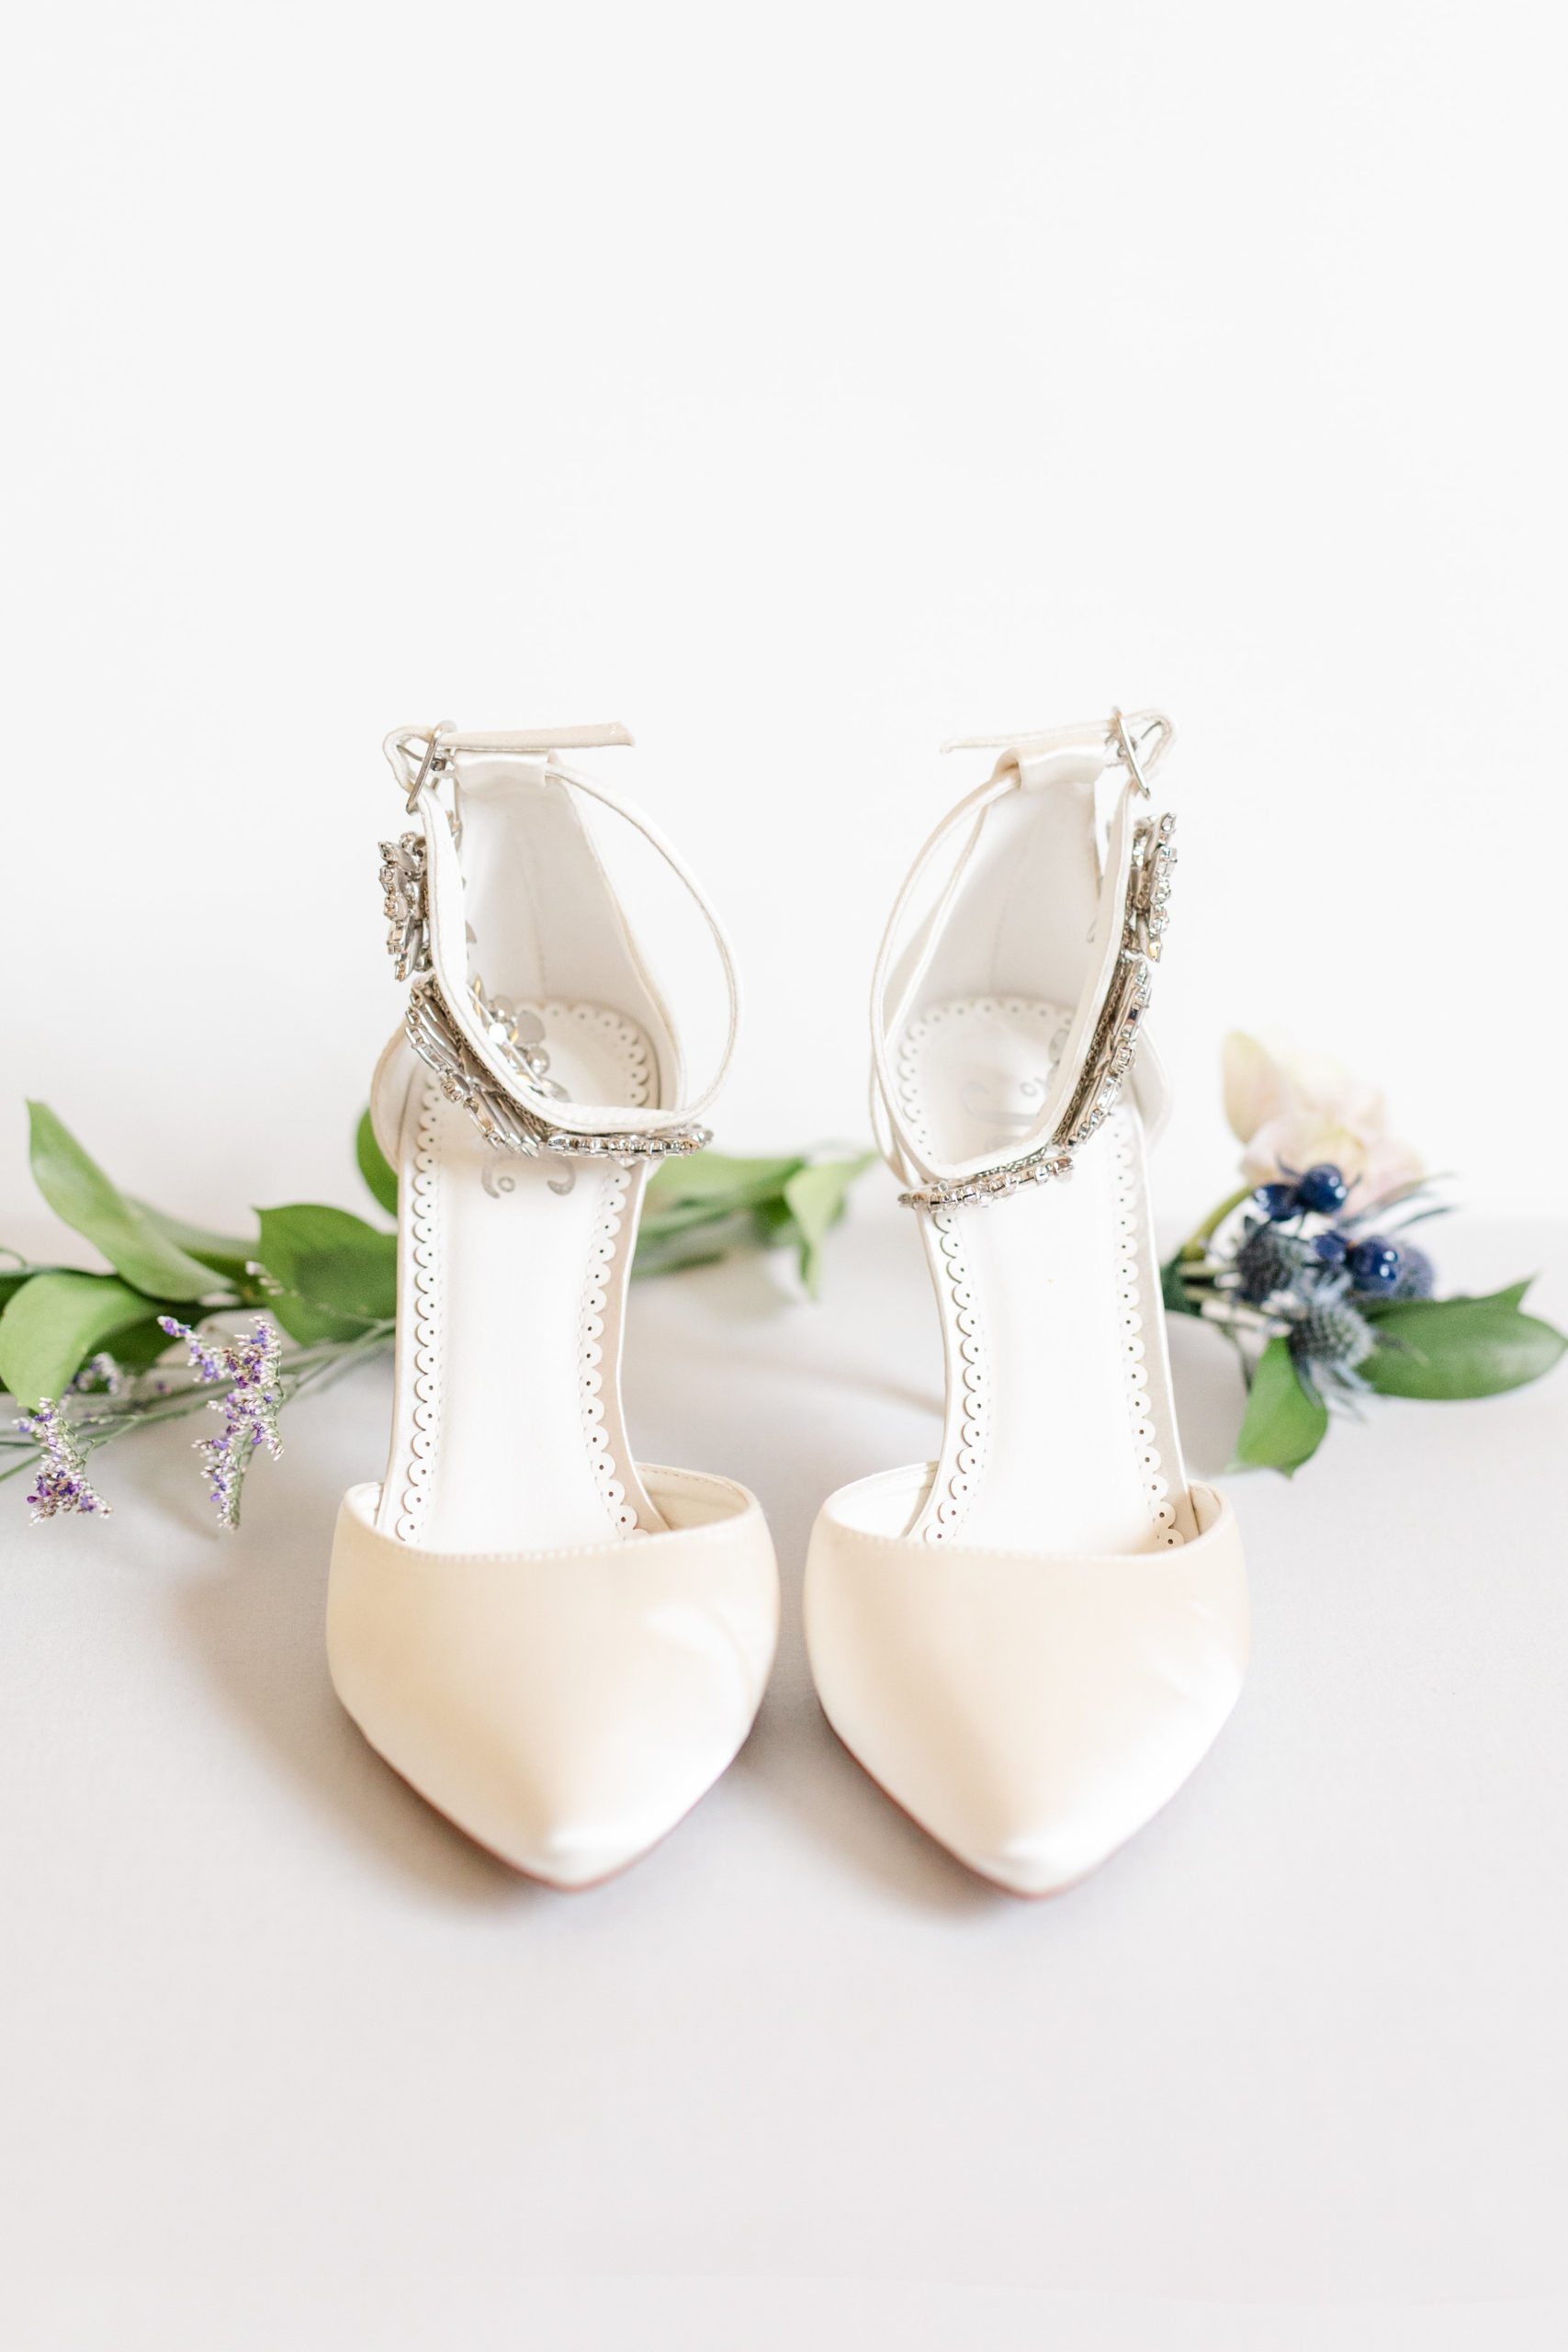 brides shoes-lauramariephotography-siouxfalls.jpeg